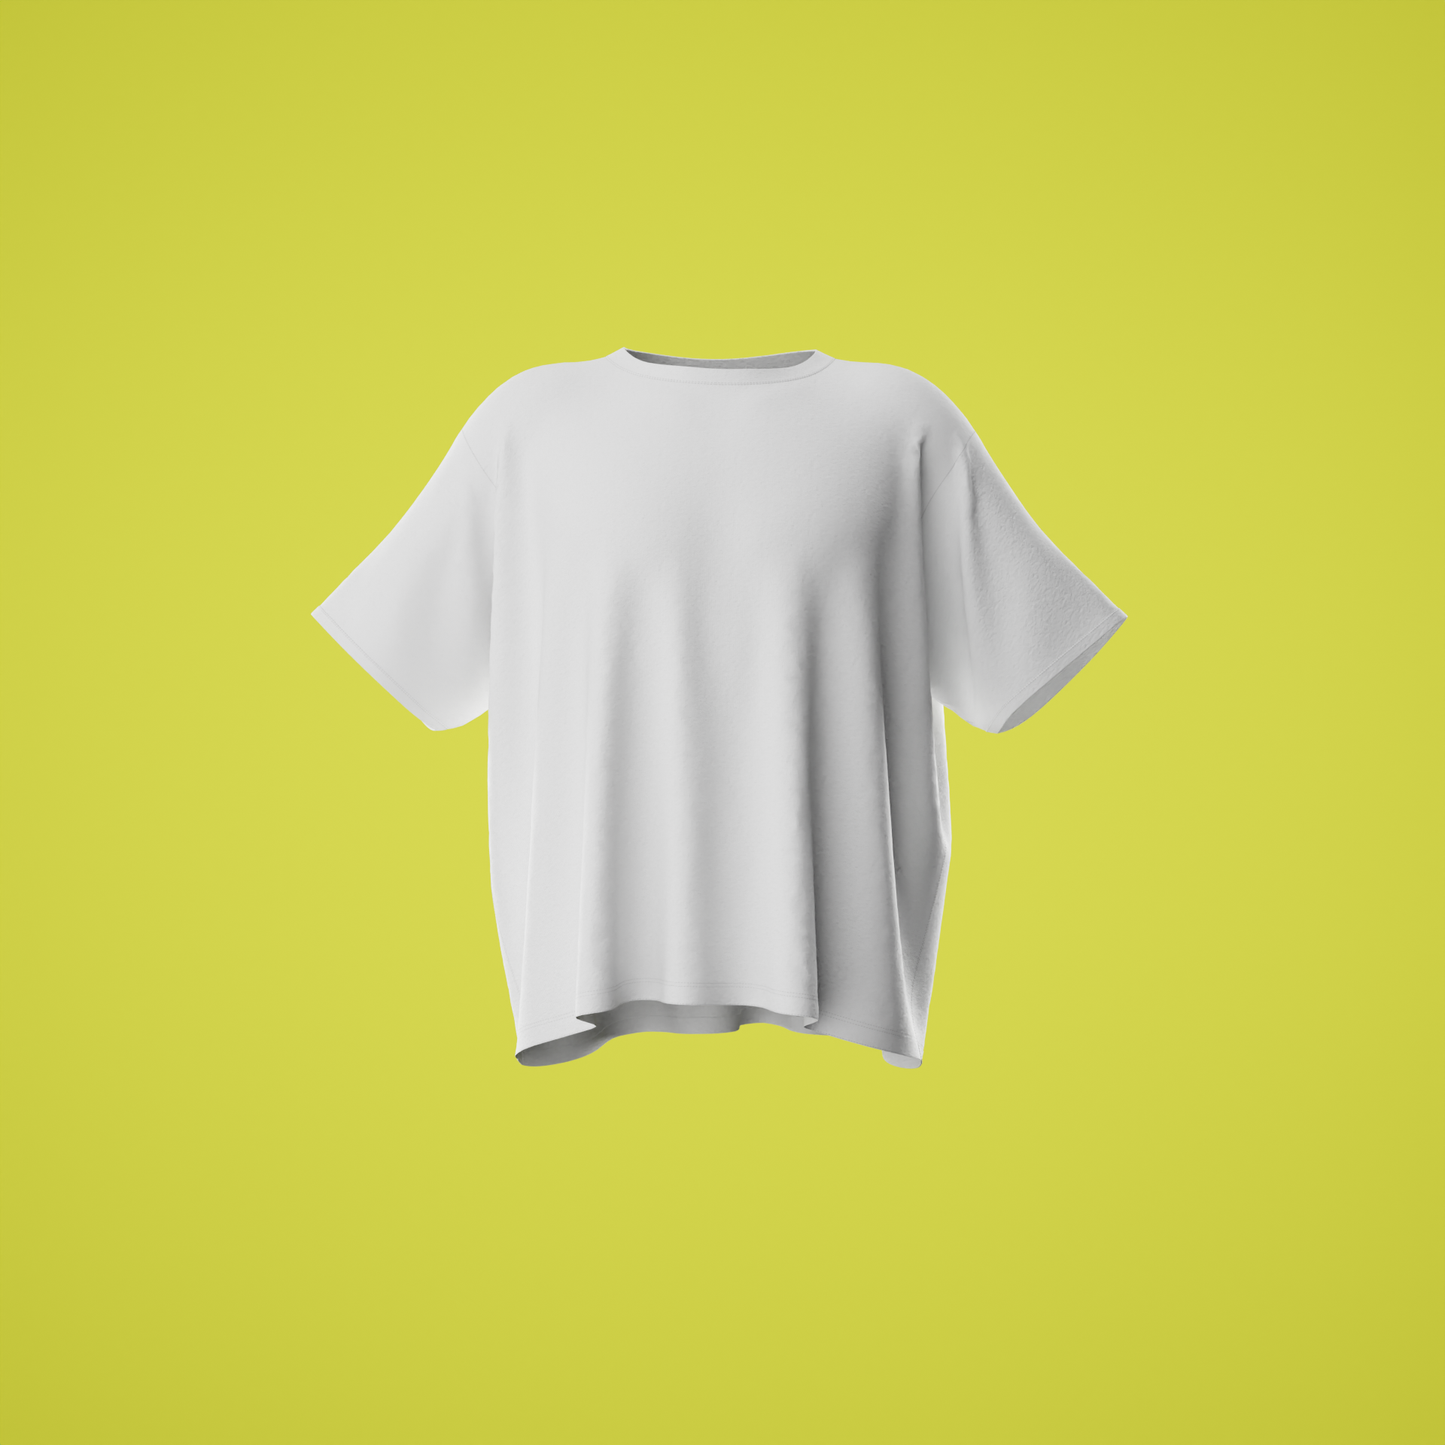 Oversized/ Regular T-shirt - 3D Mockup